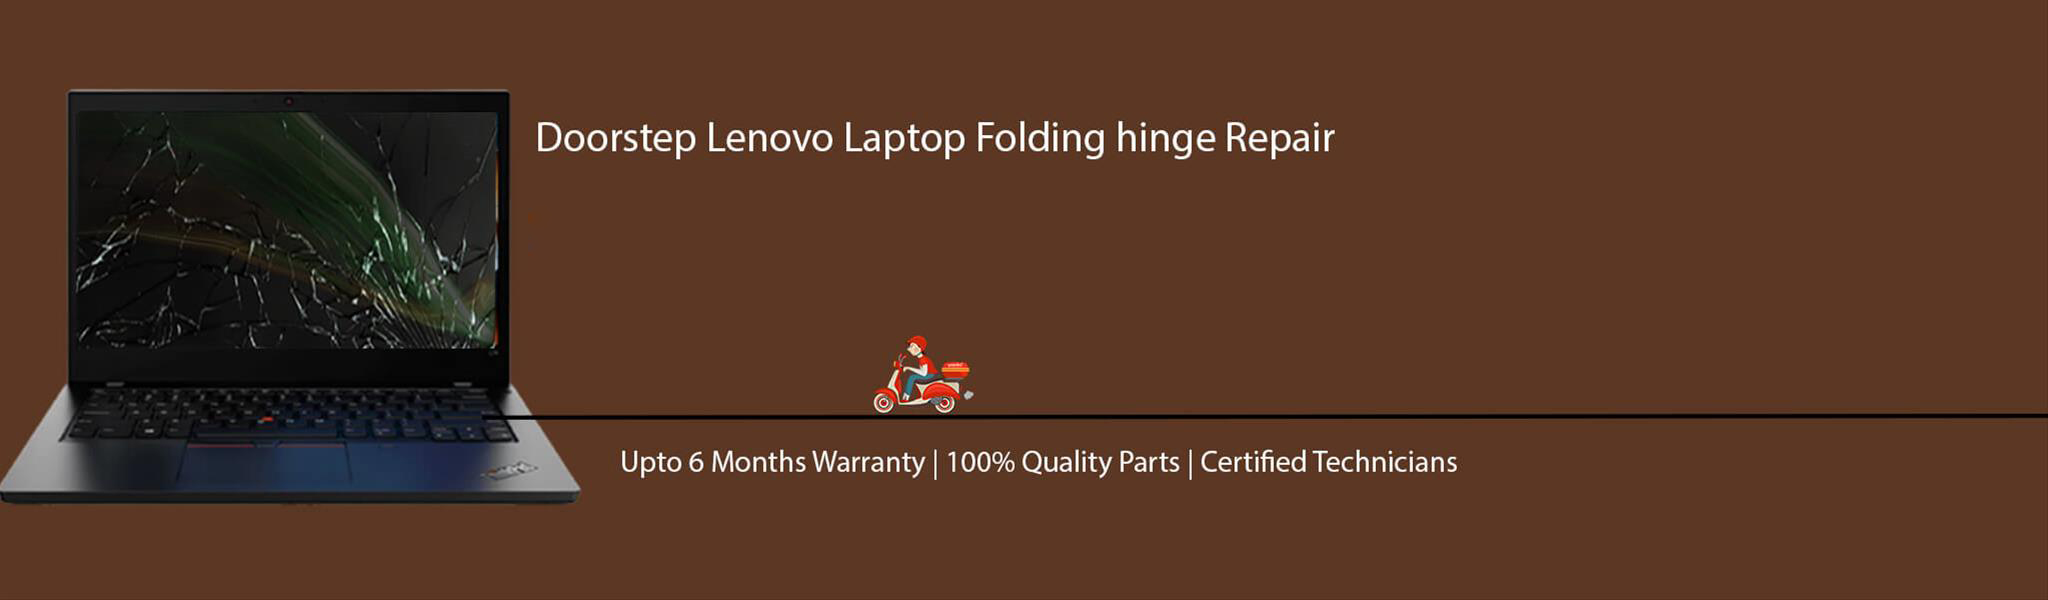 lenovo-laptop-folding-hinge-repair.jpg